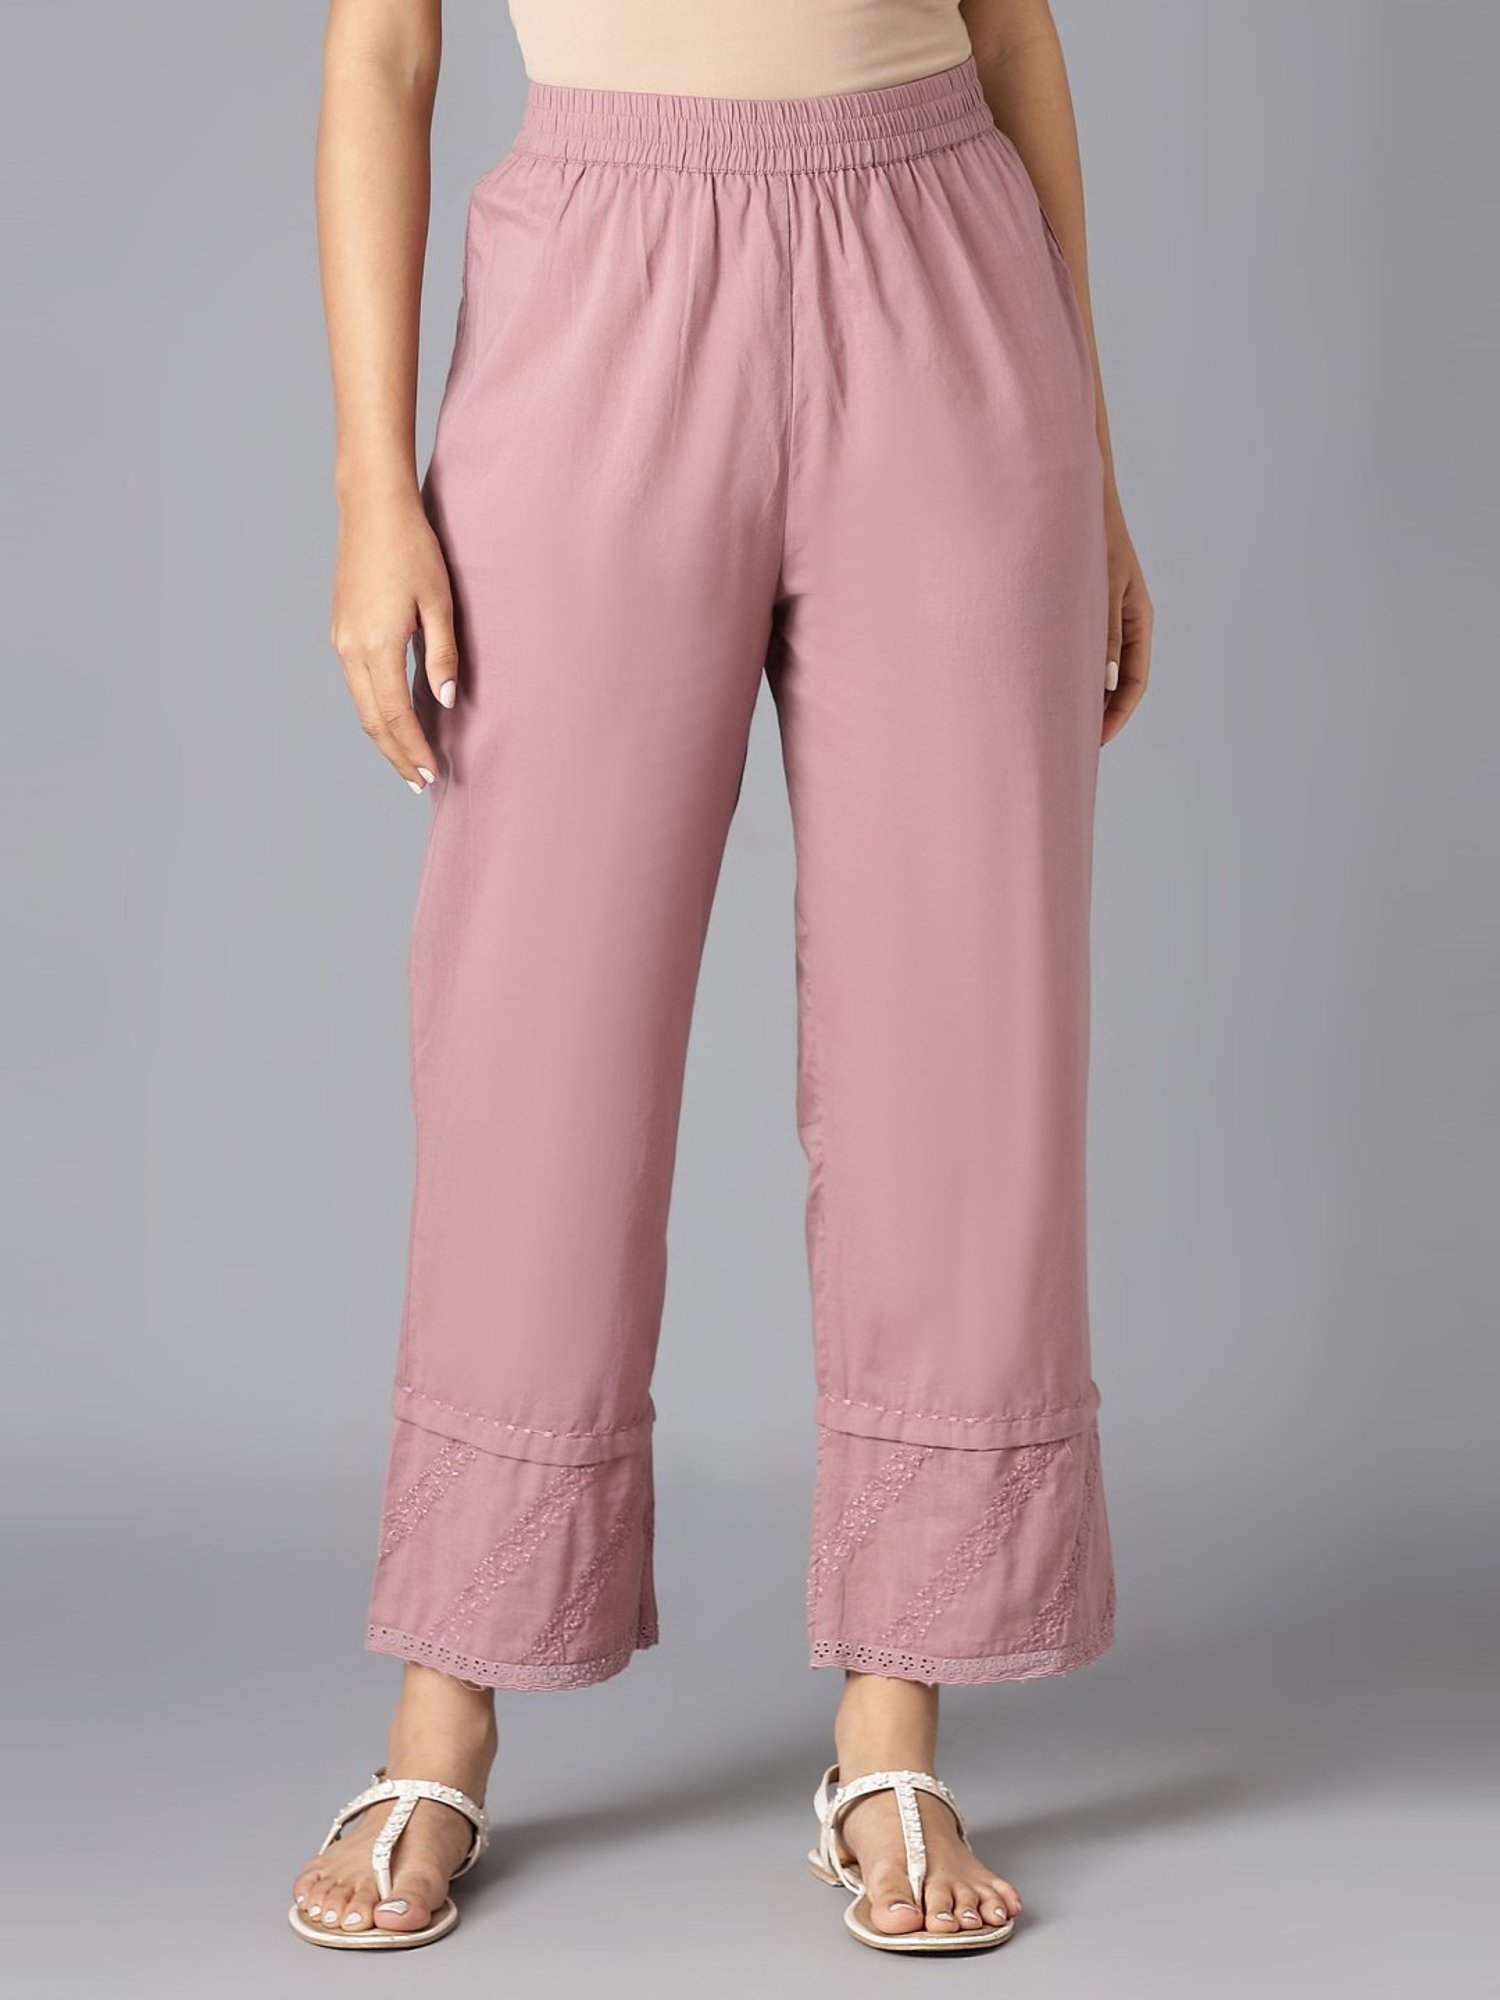 Cotton Stretch Pants for Women  Intermod Workwear